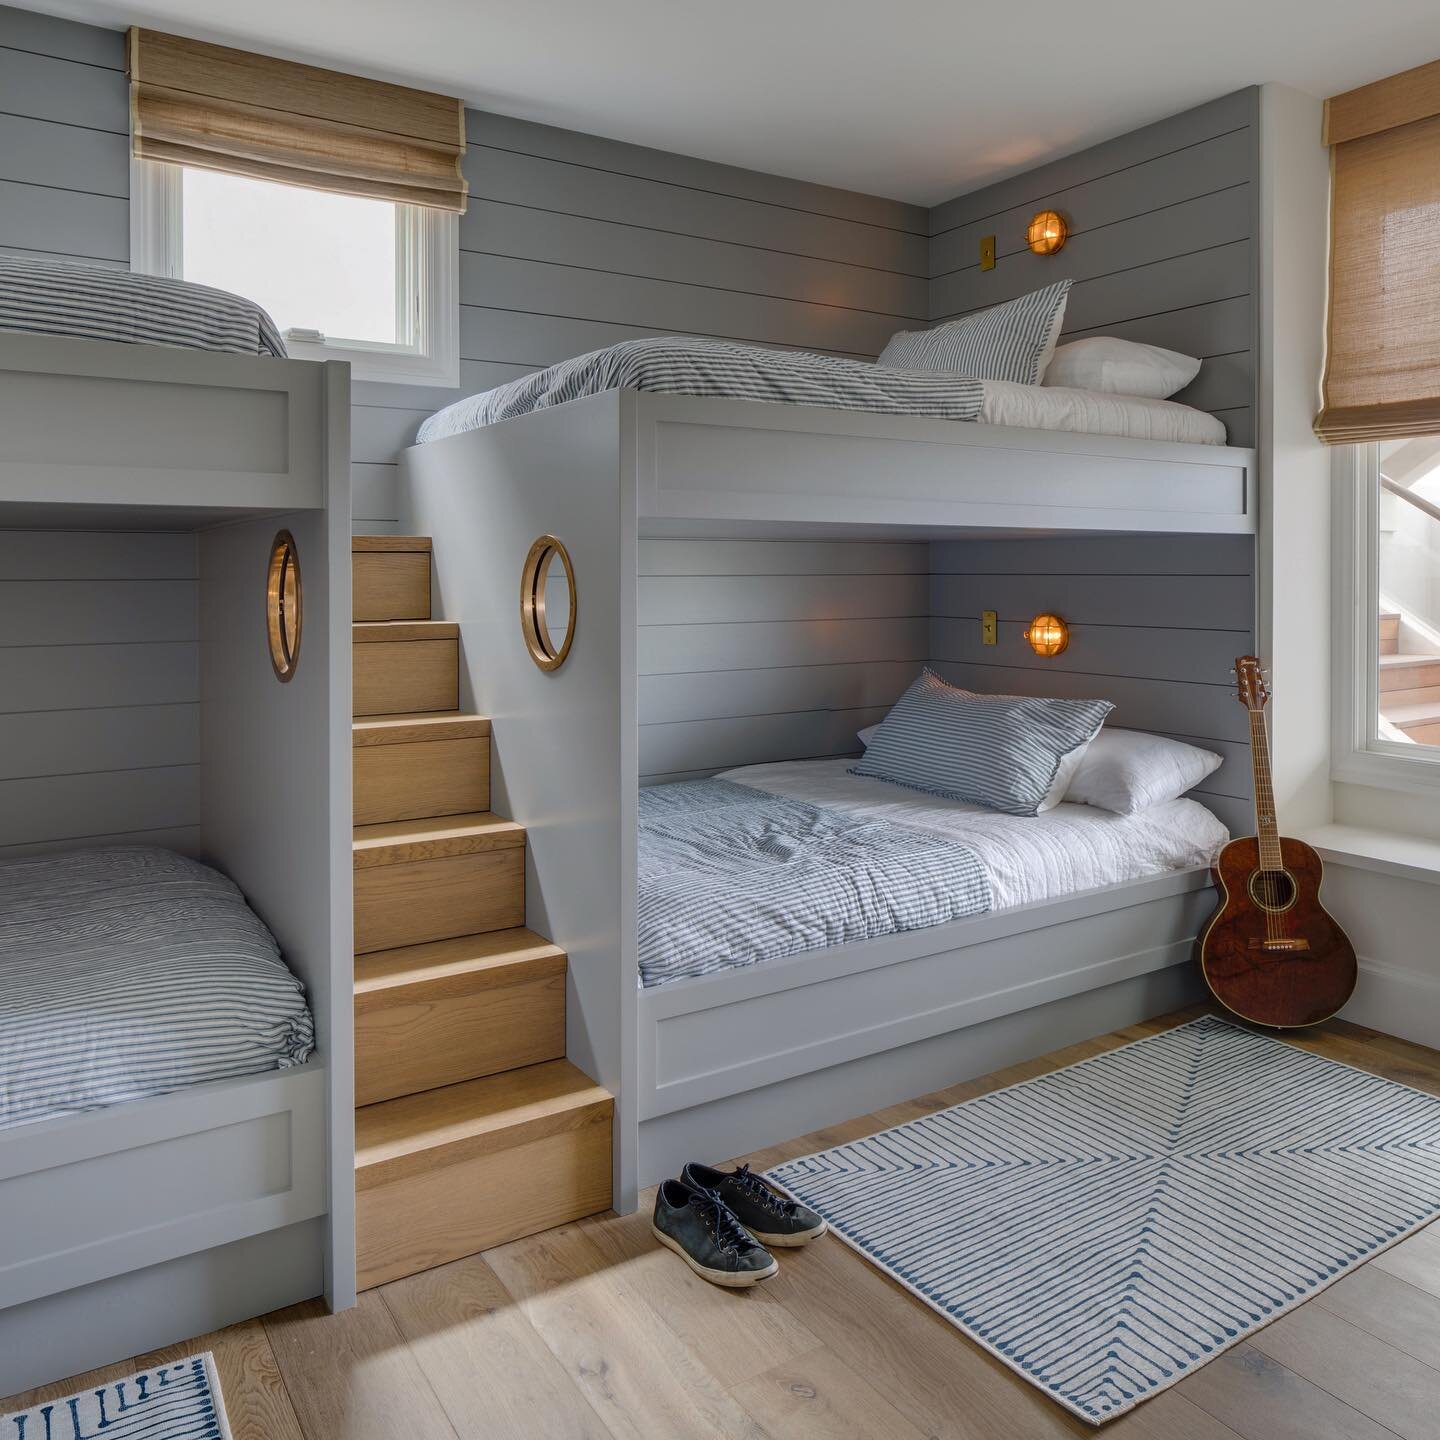 Bunk room! #bedroom #bunkroom #custombed #stairstorage #interiordesign